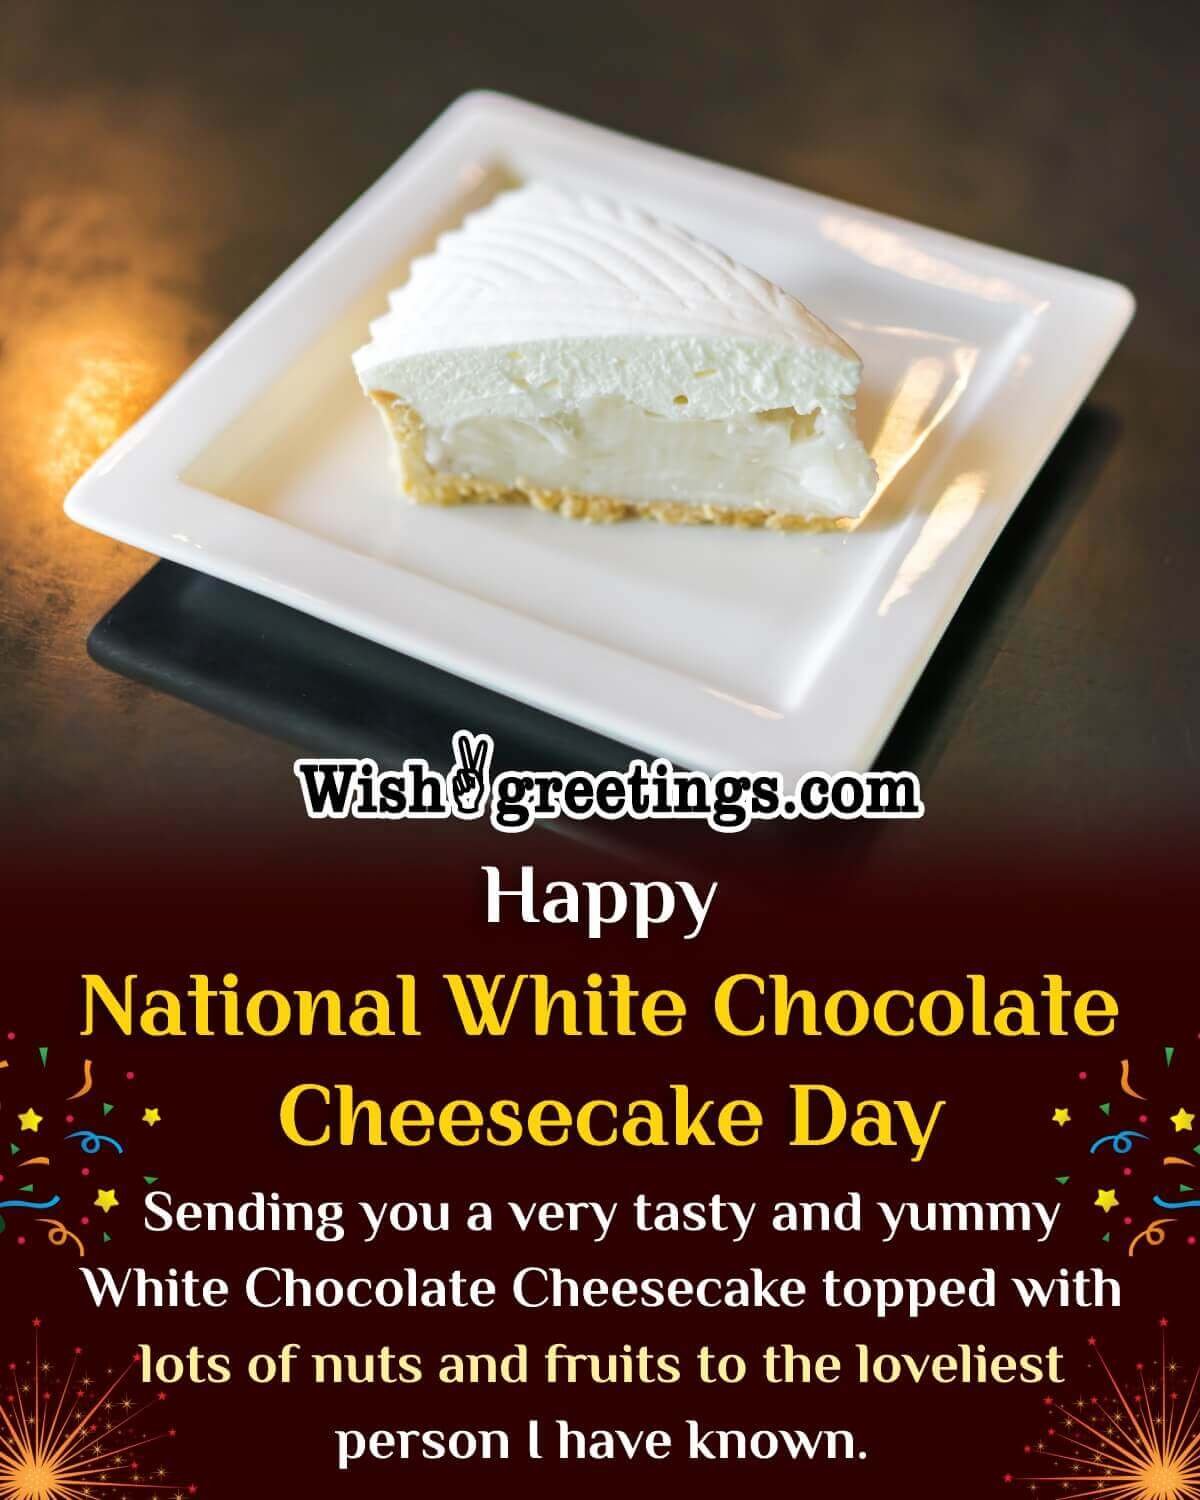 National White Chocolate Cheesecake Day Greeting Image